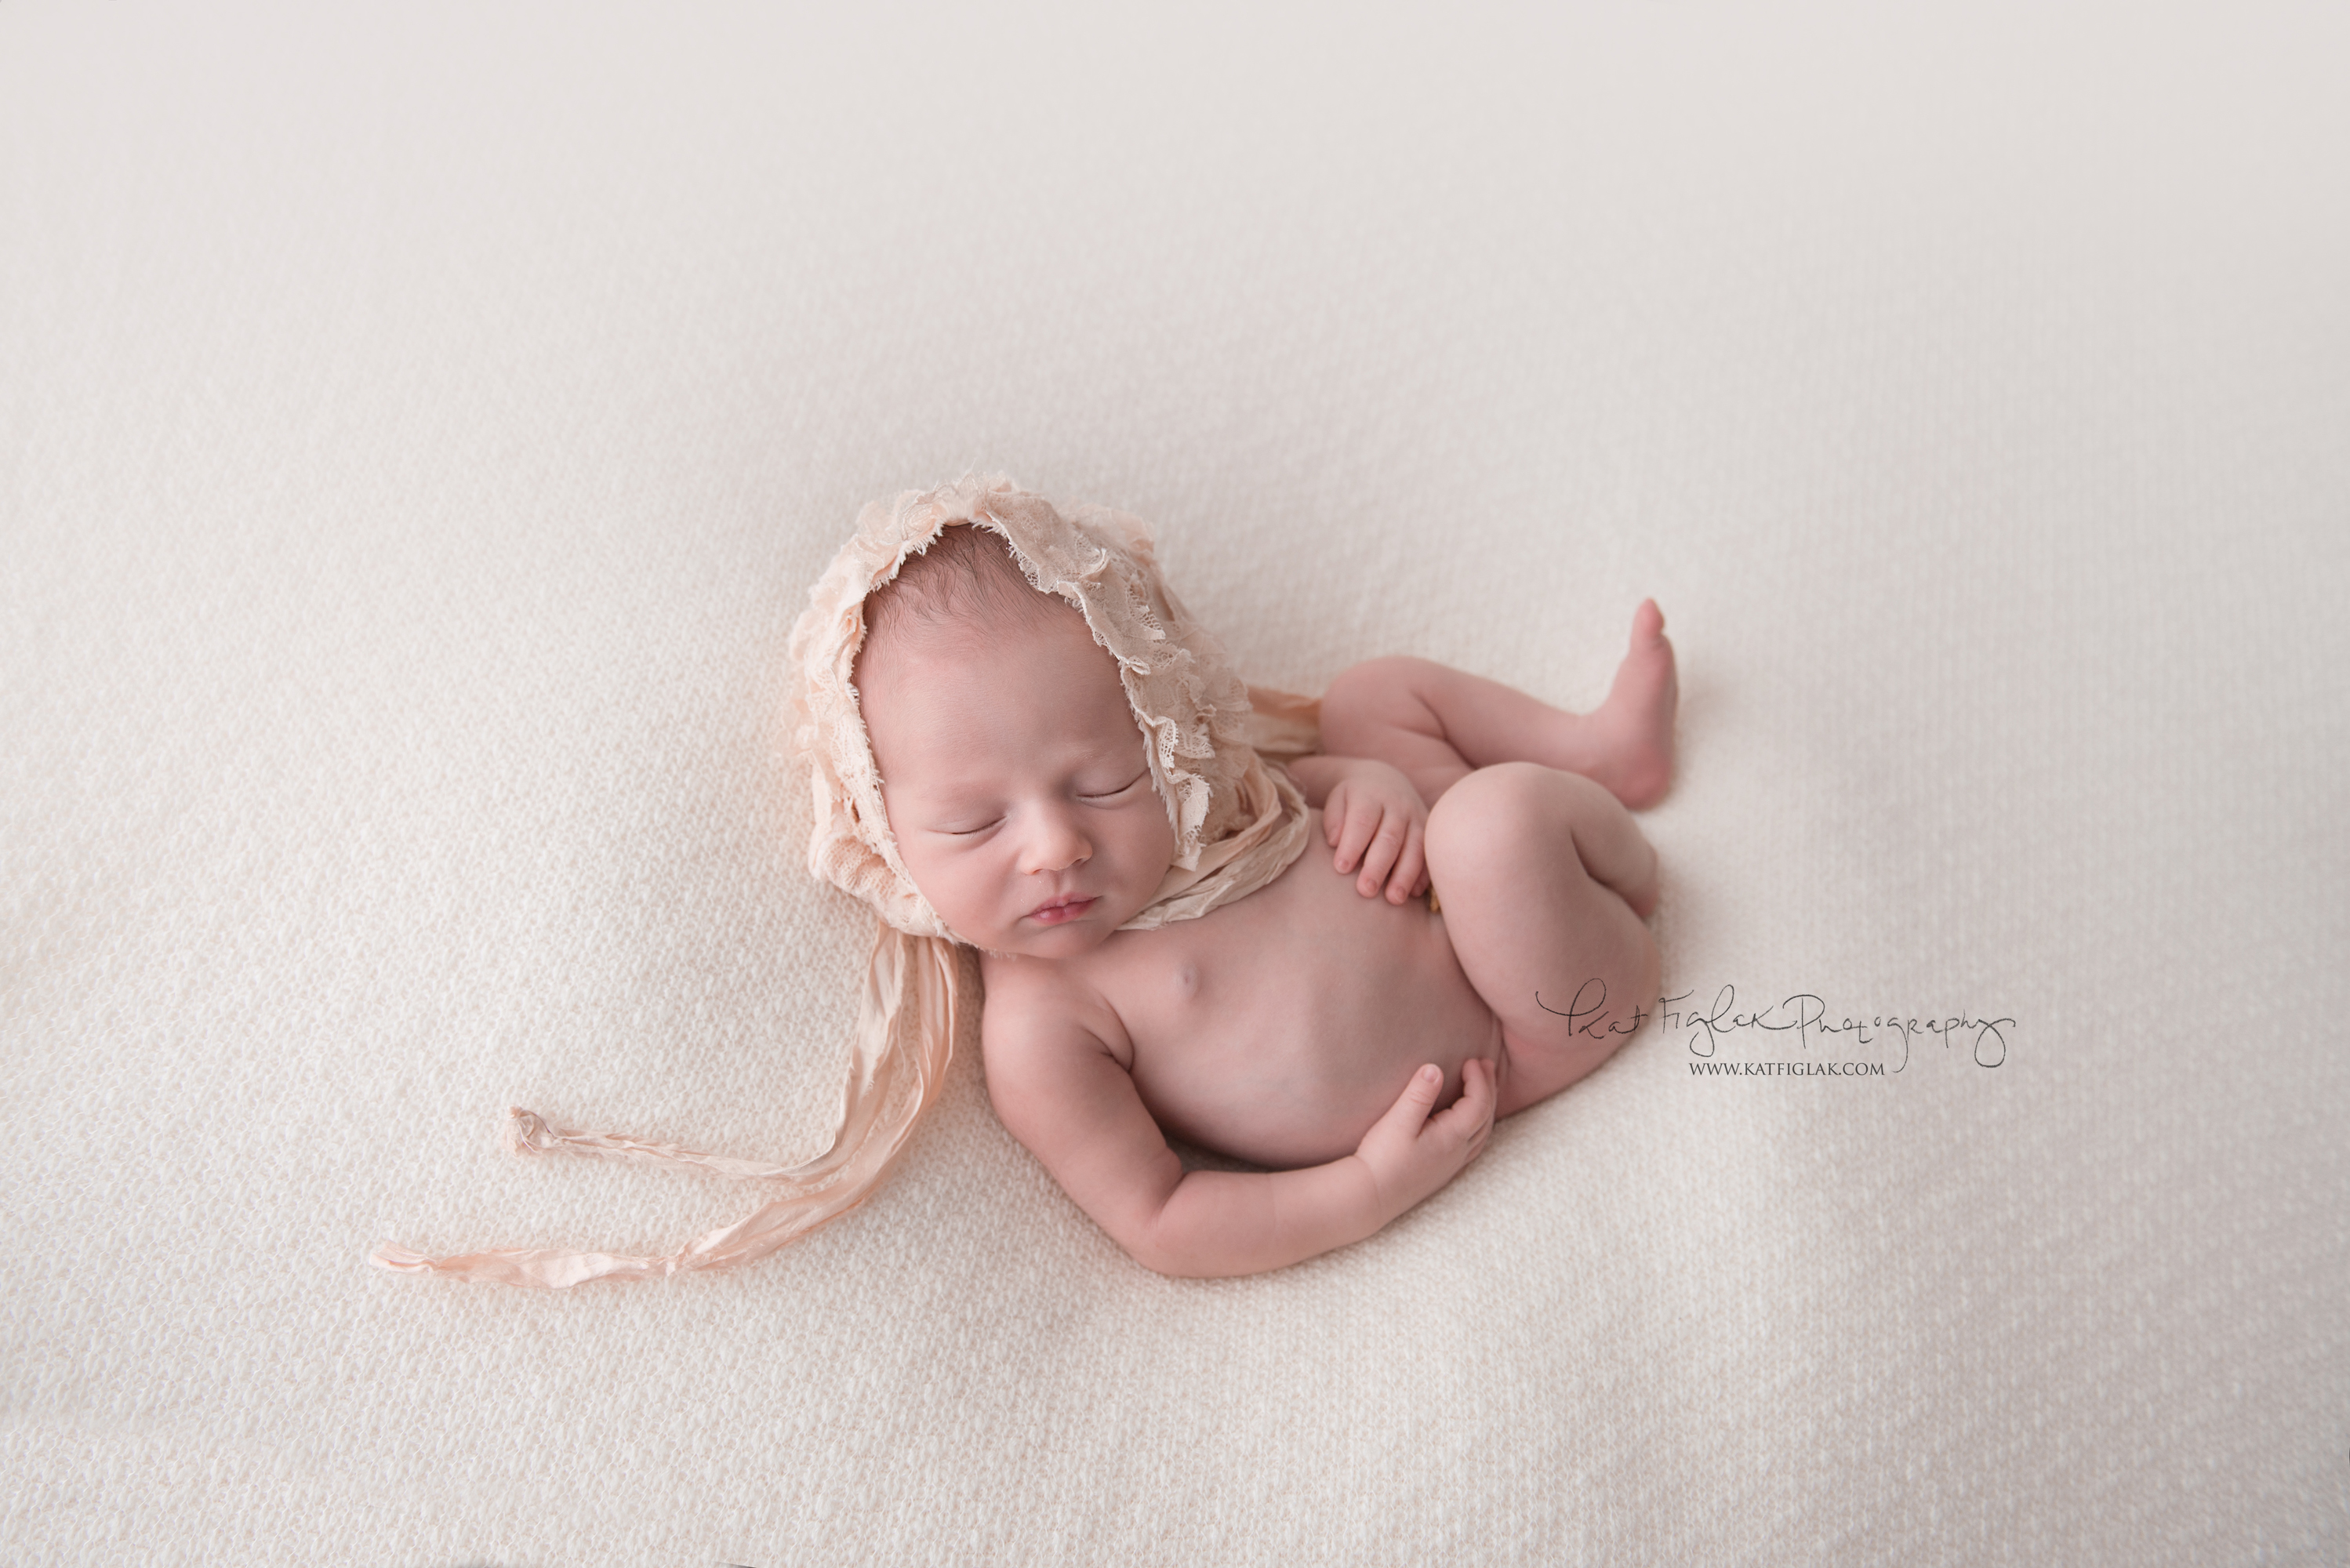 newborn baby girl laying on white knit fabric wearing a blush vintage bonnet